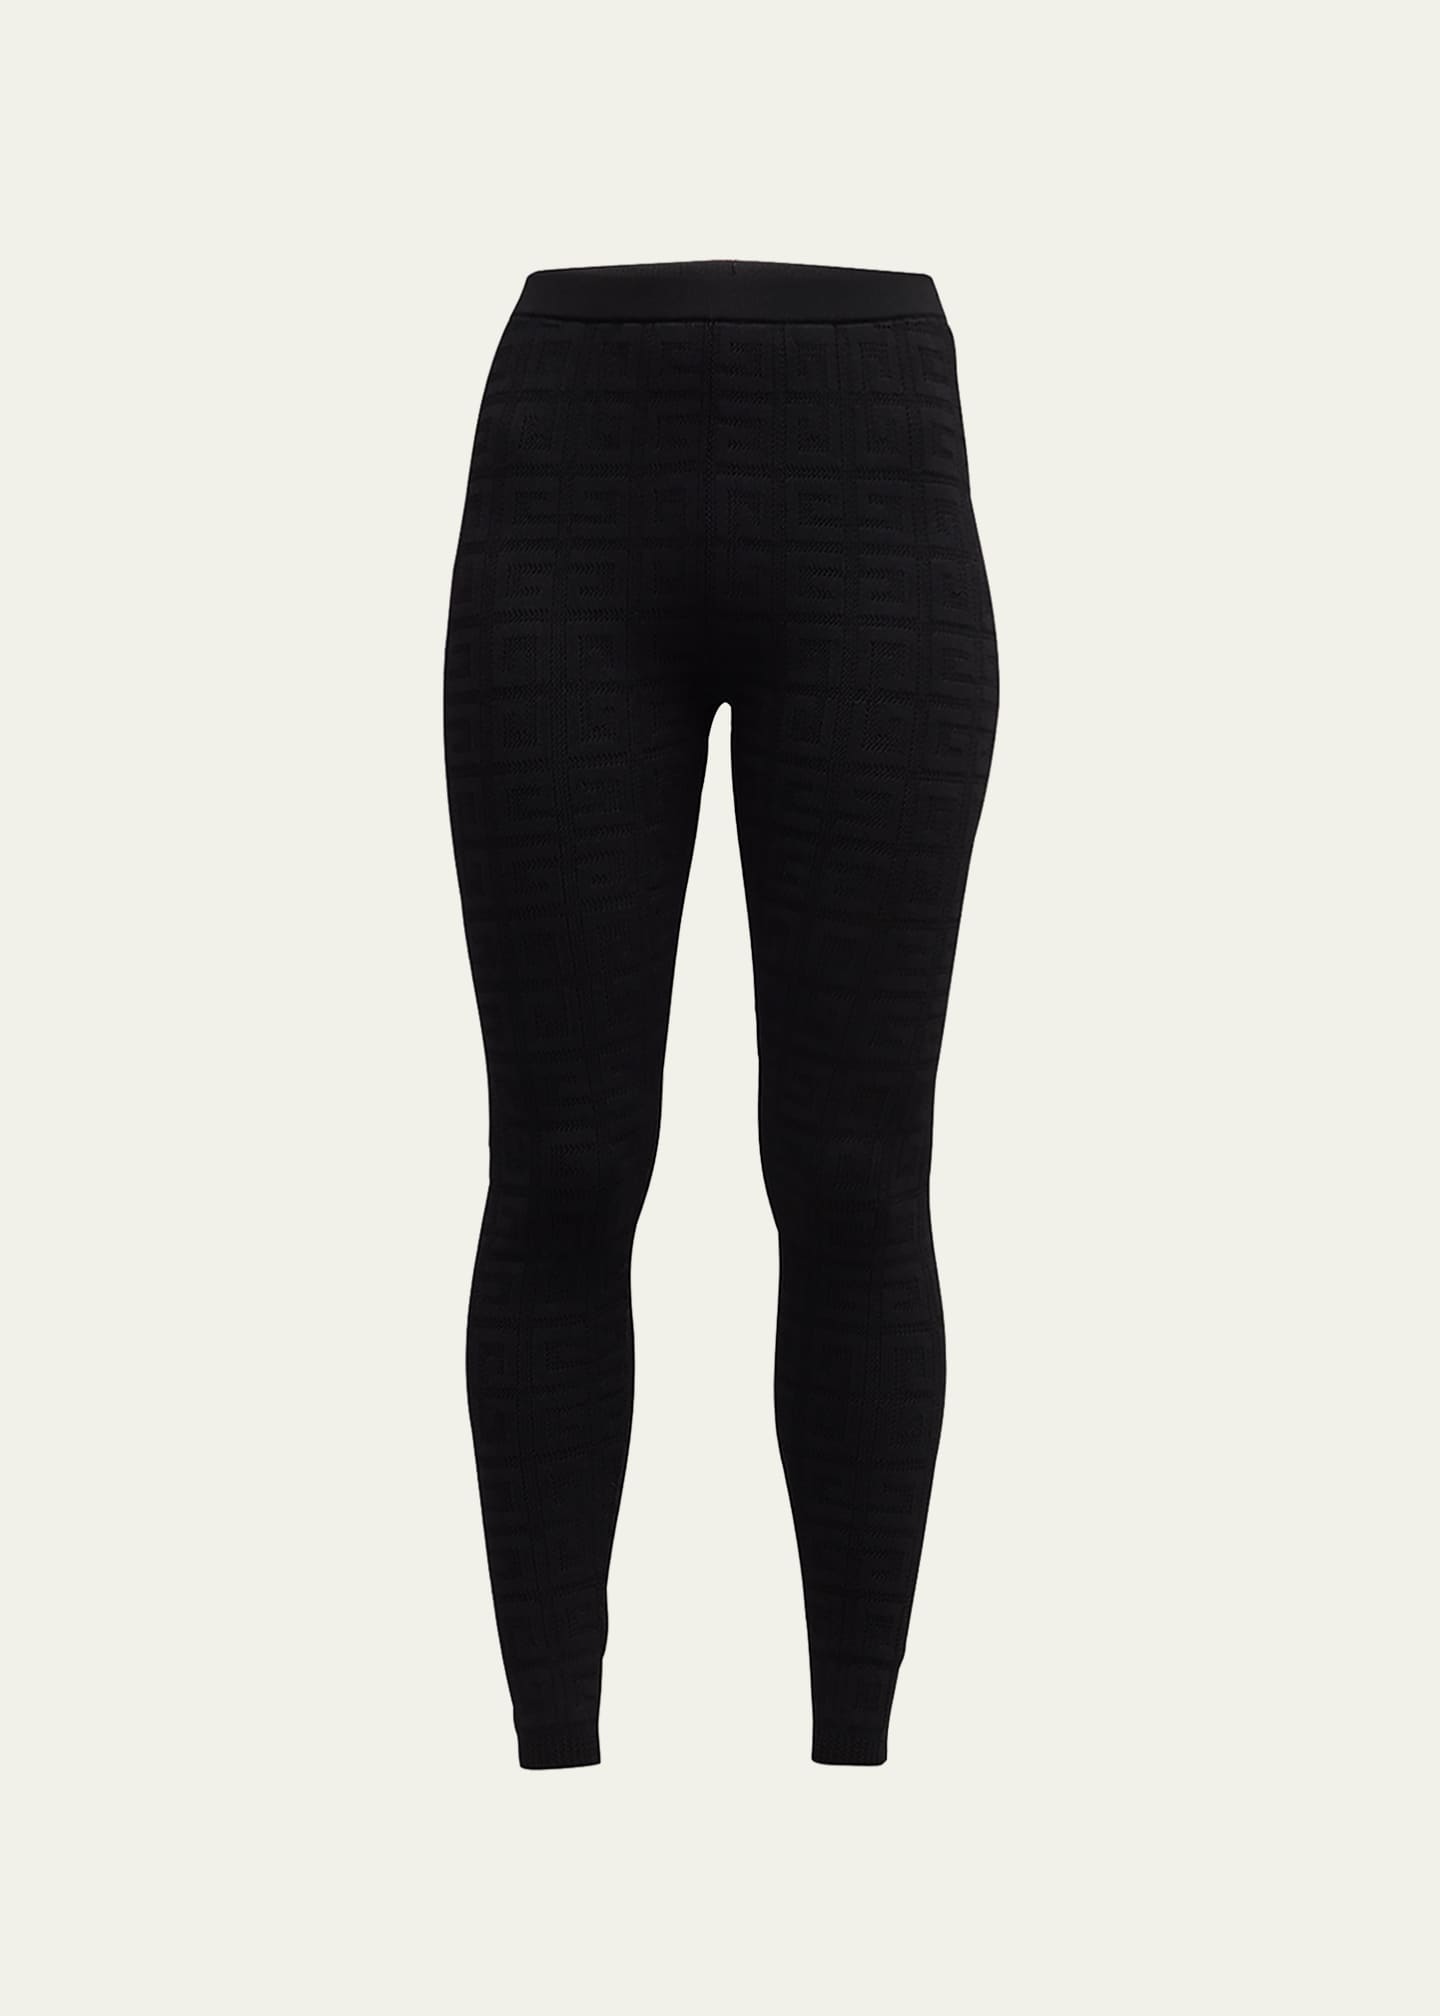 Givenchy Black Knit Skinny Leggings M Givenchy